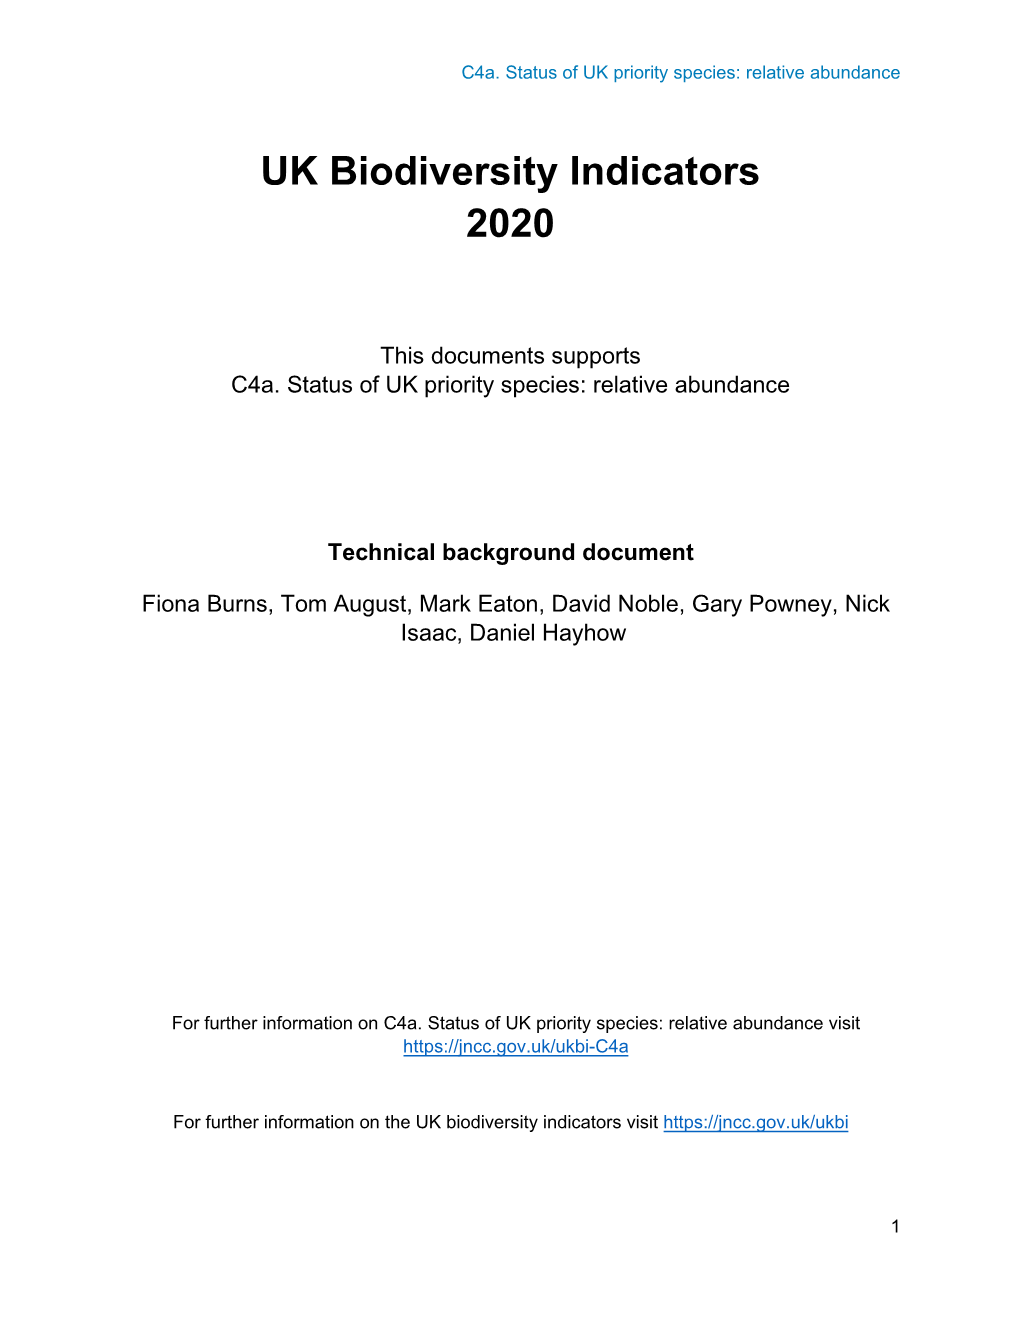 C4a. Status of UK Priority Species: Relative Abundance